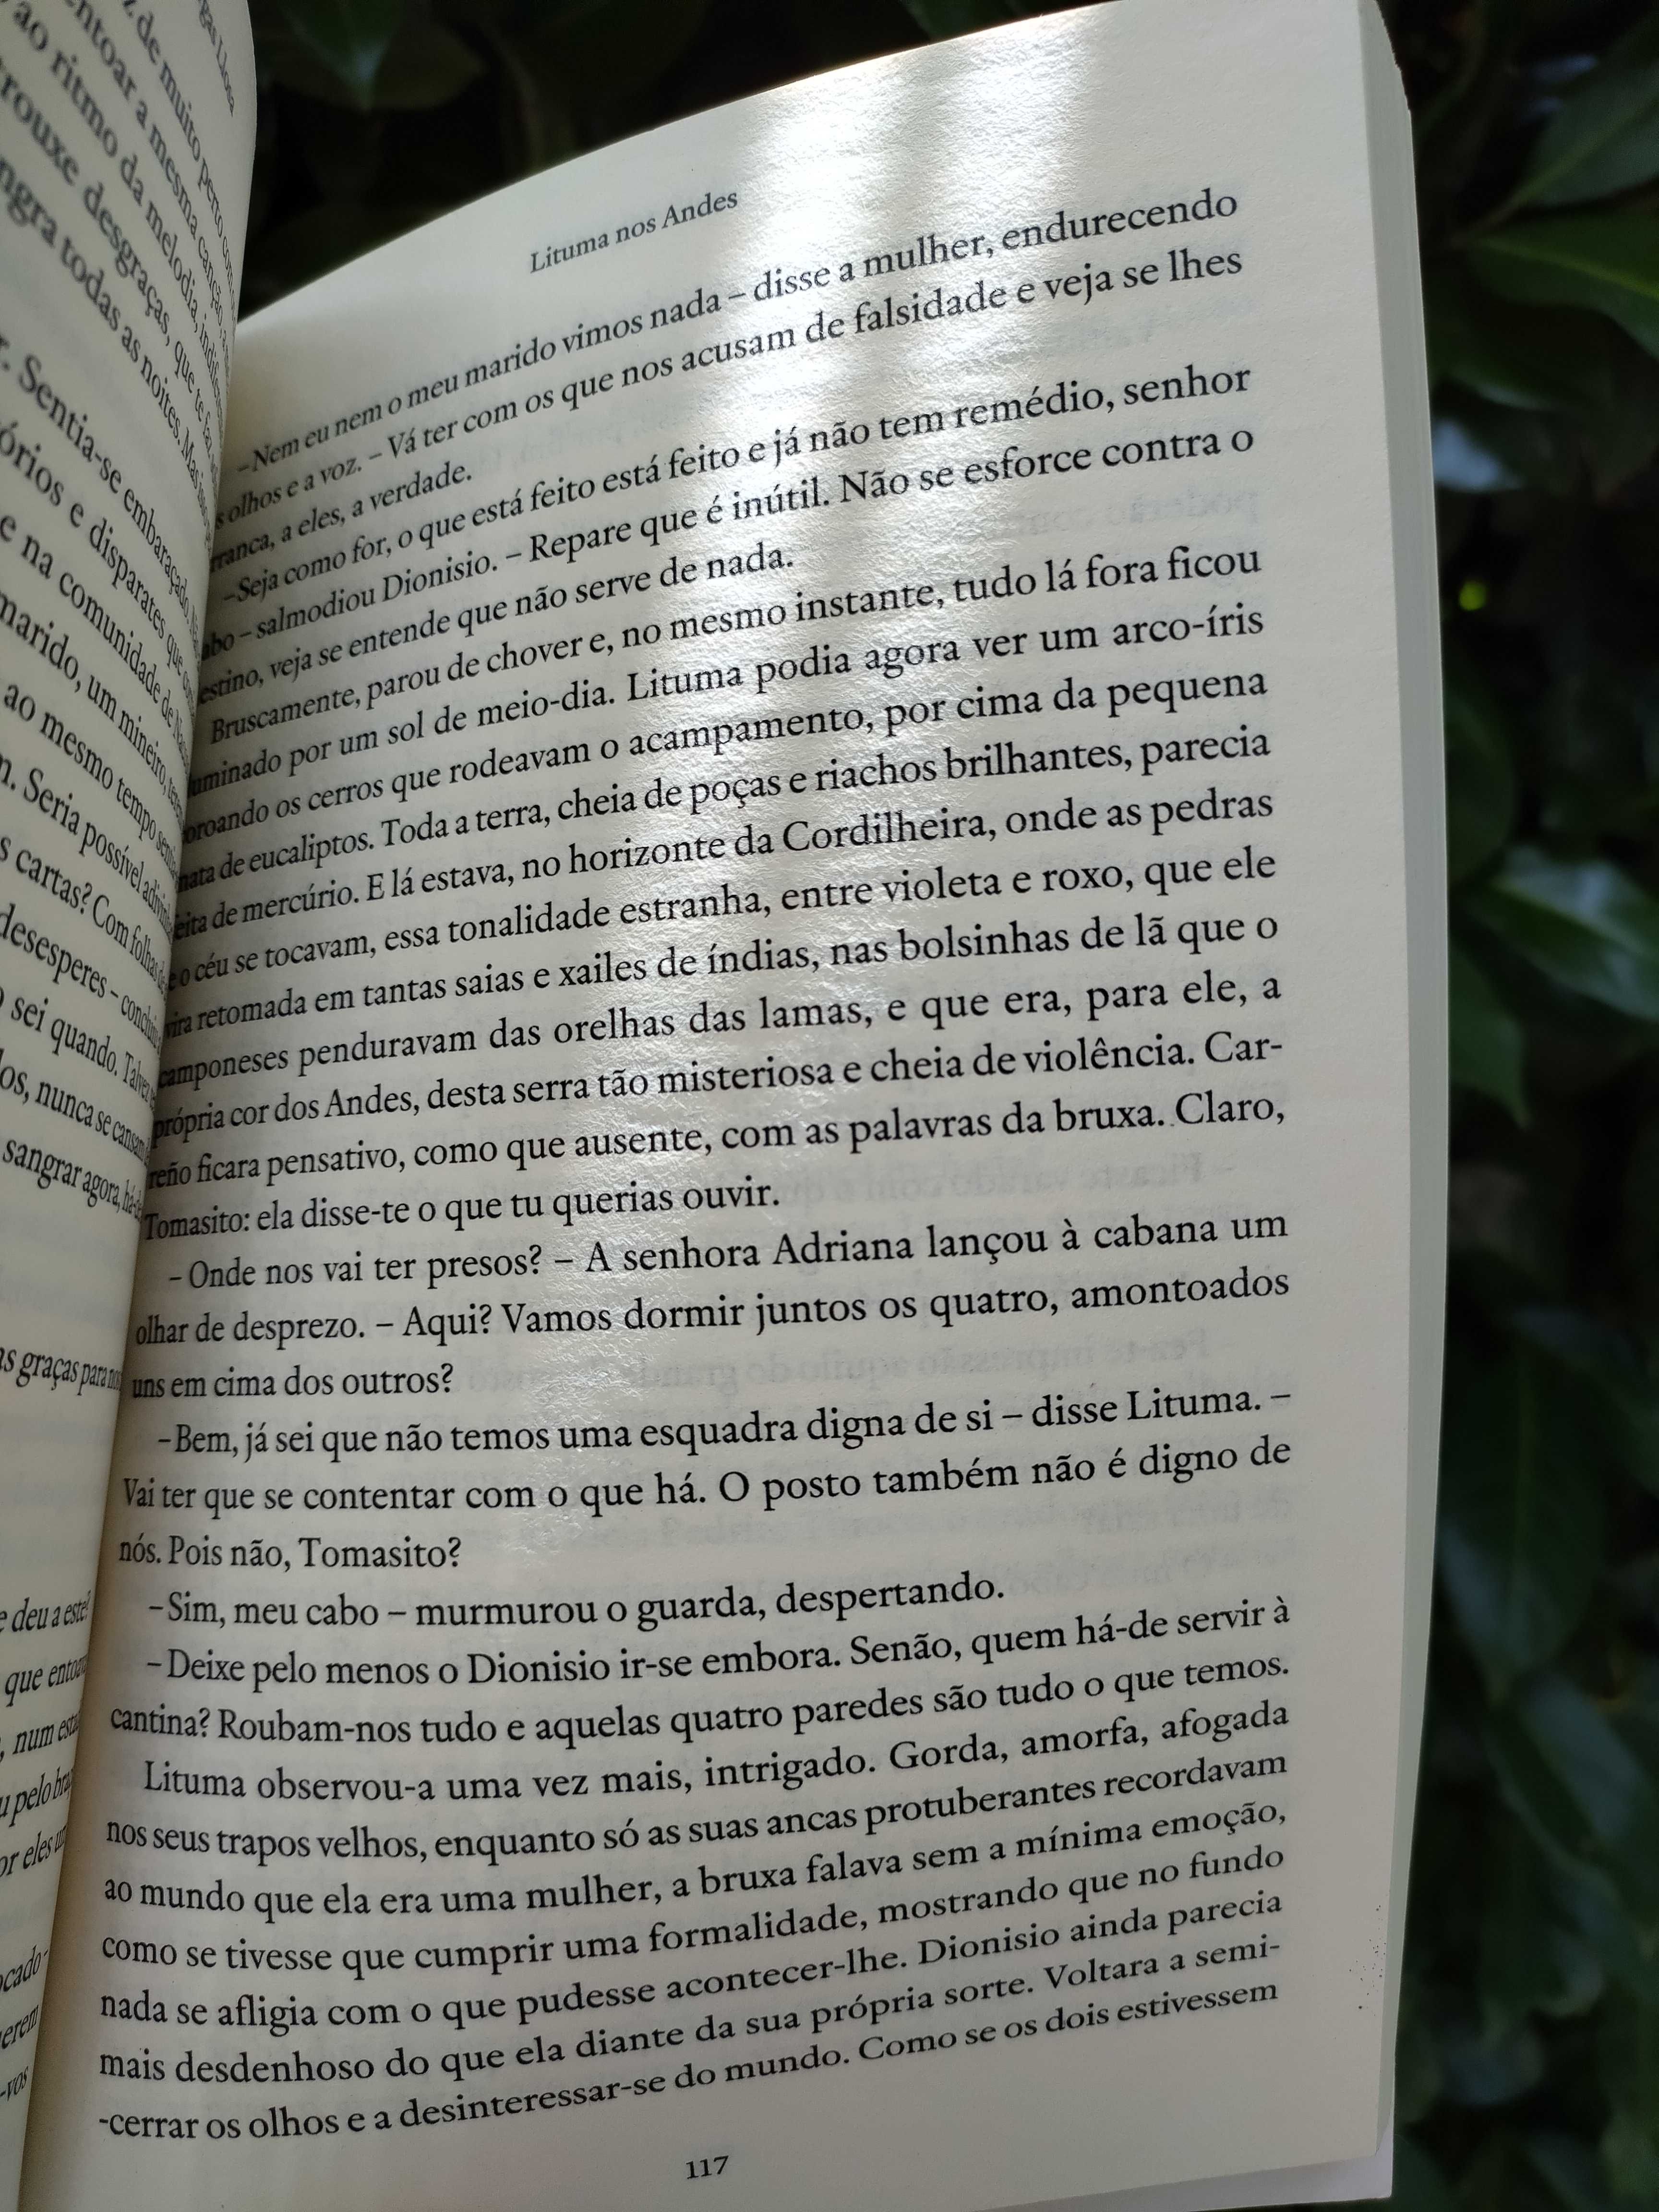 Lituma nos Andes (Mário Vargas Llosa)